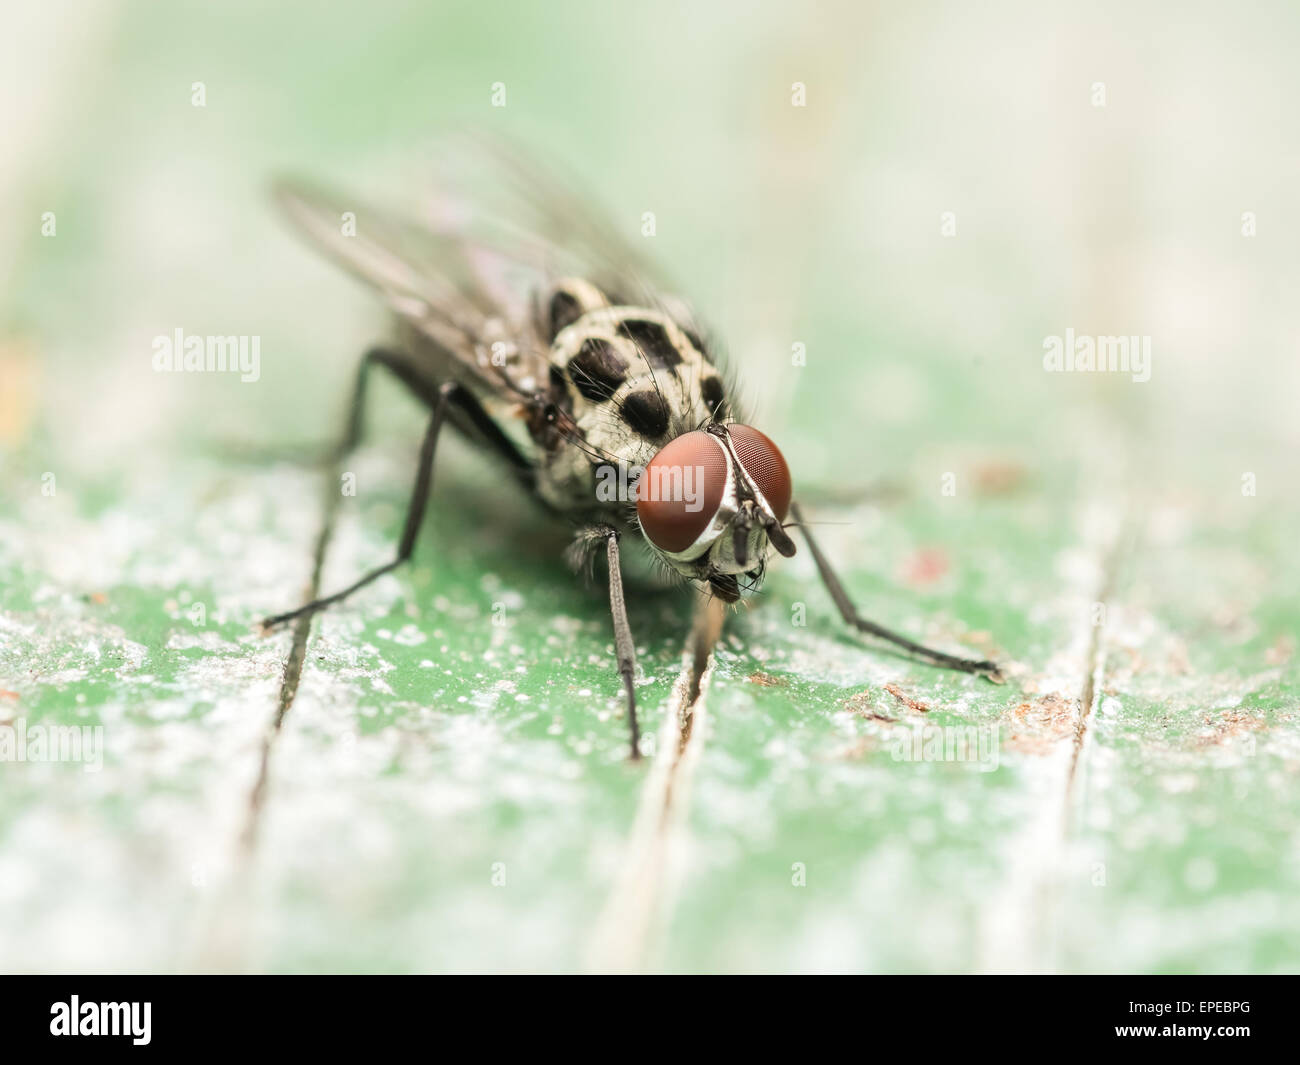 Housefly Macro On Green Wood Background Stock Photo